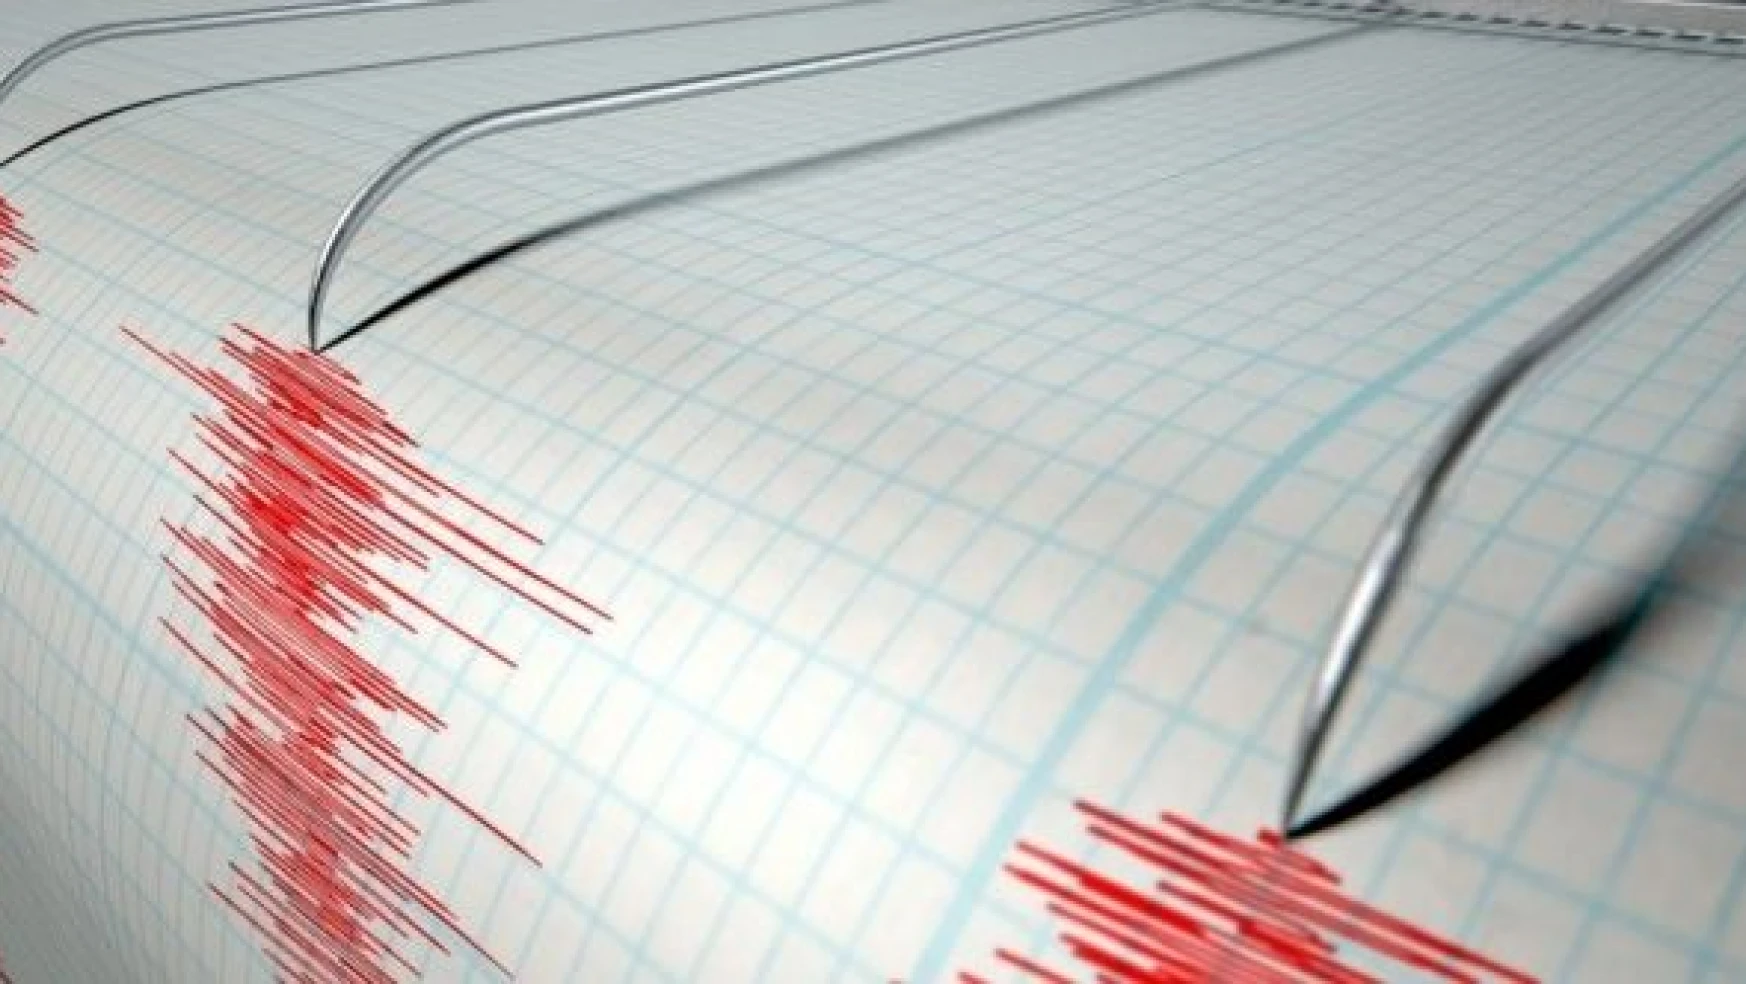 Kahramanmaraş'da deprem: 4.5